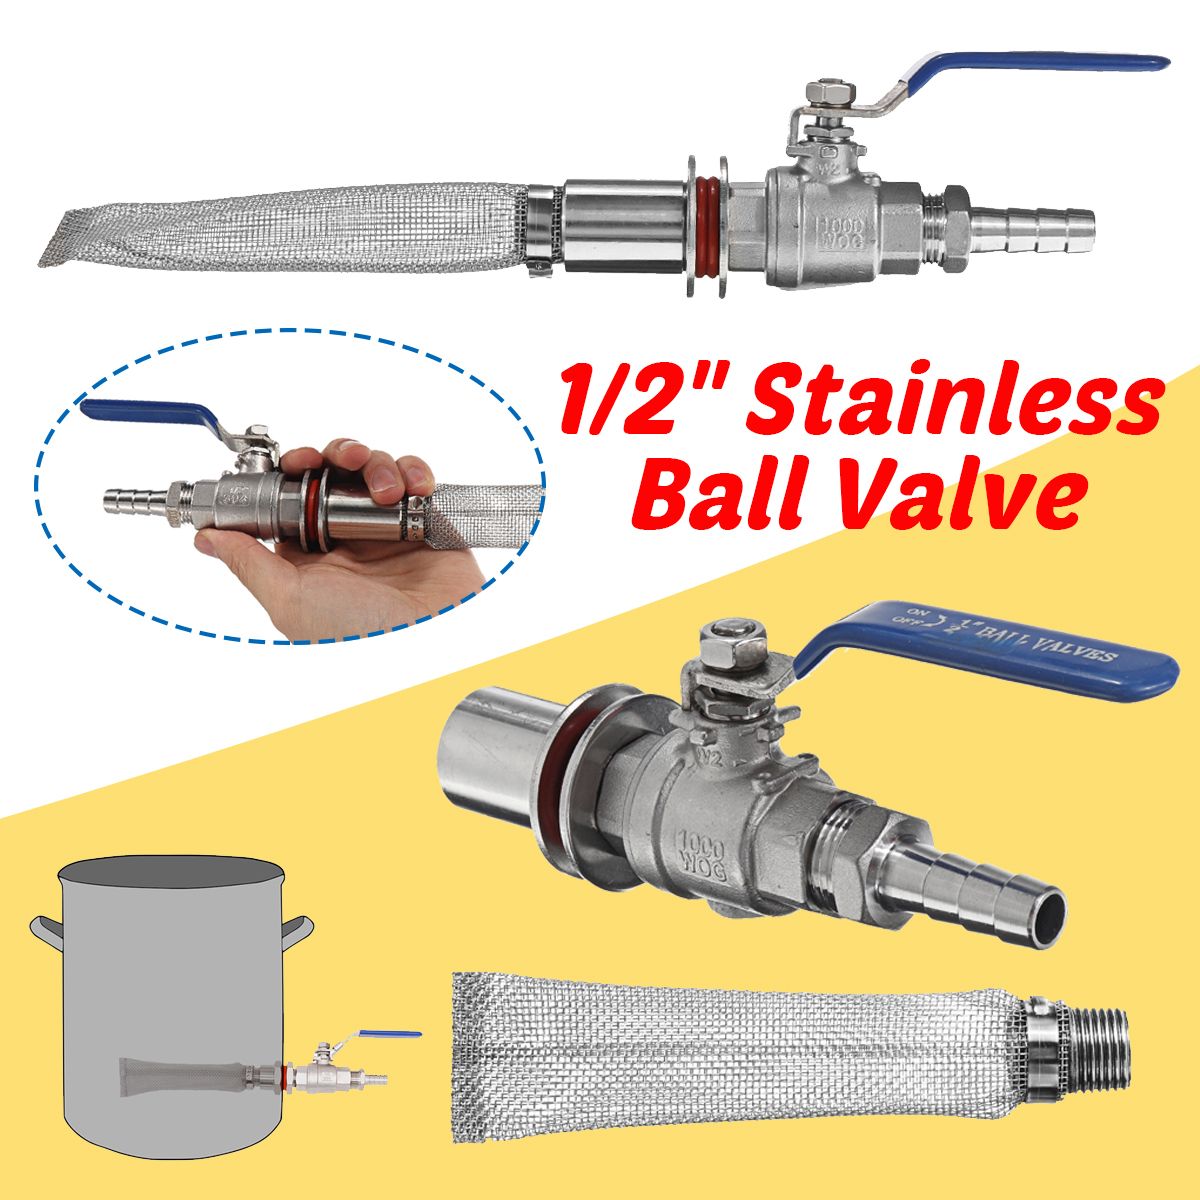 12-Stainless-Weldless-Ball-Valve-Barb-Homebrew-Fitting-Kettle-Pot-Hardware-1745173